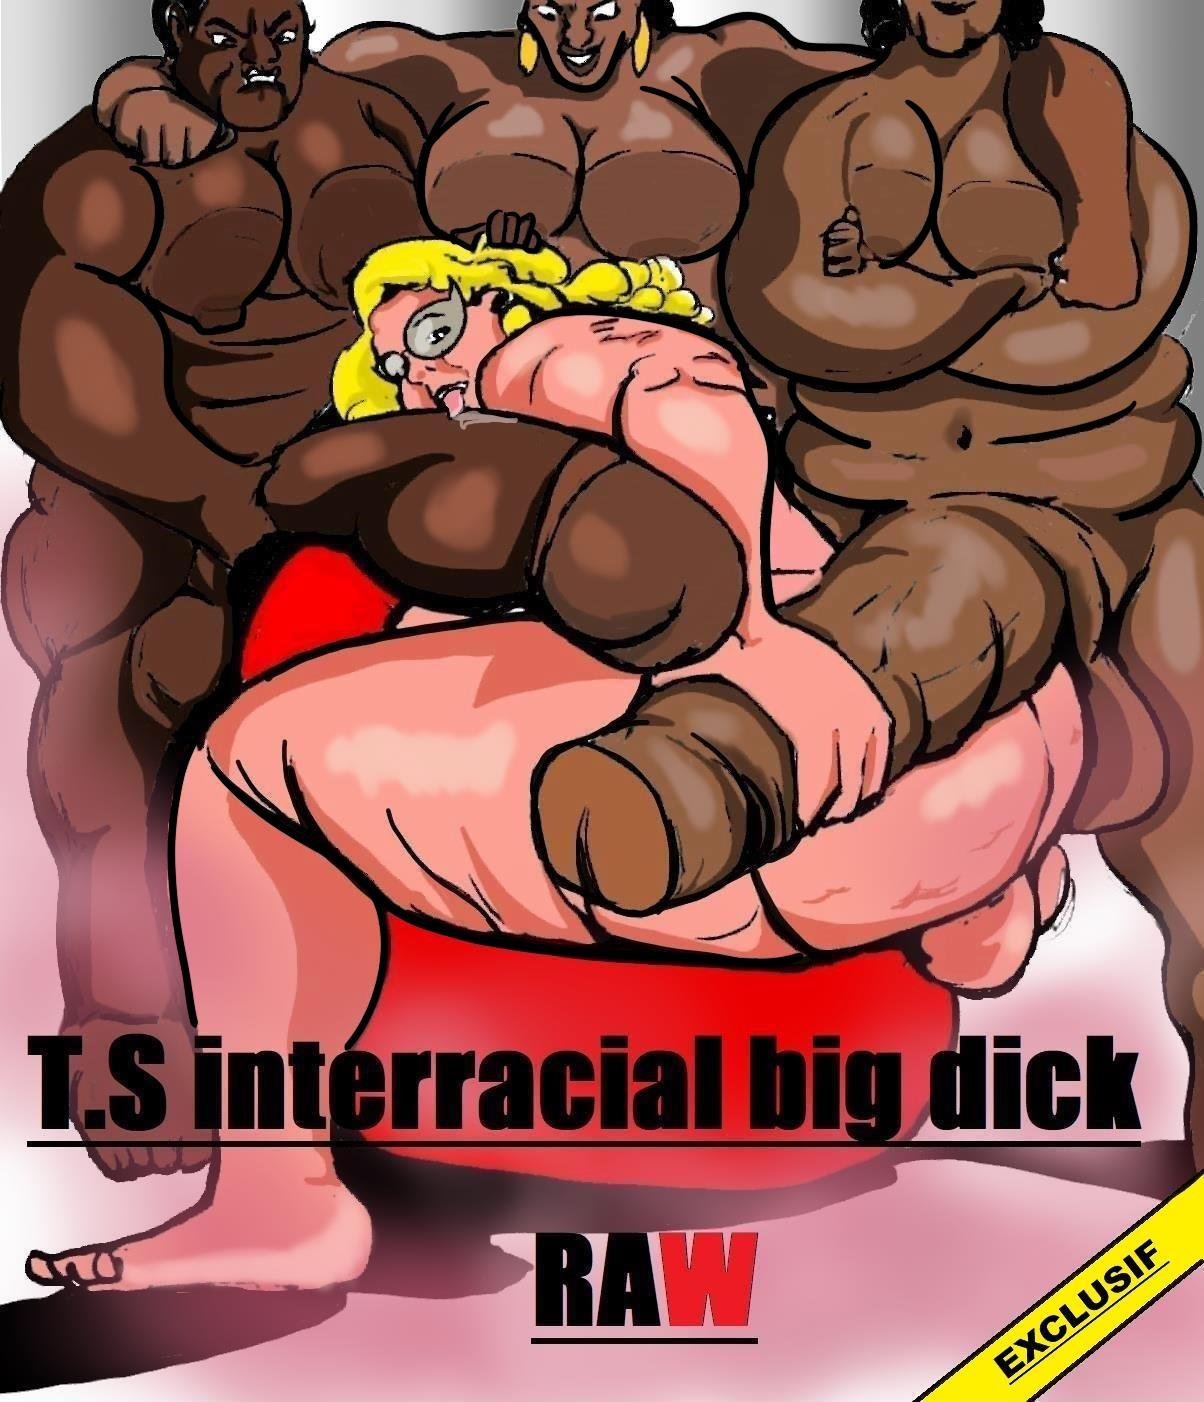 Hungry Dick Shemale - T.S Interracial big dick RAW Â» Porn comics free online